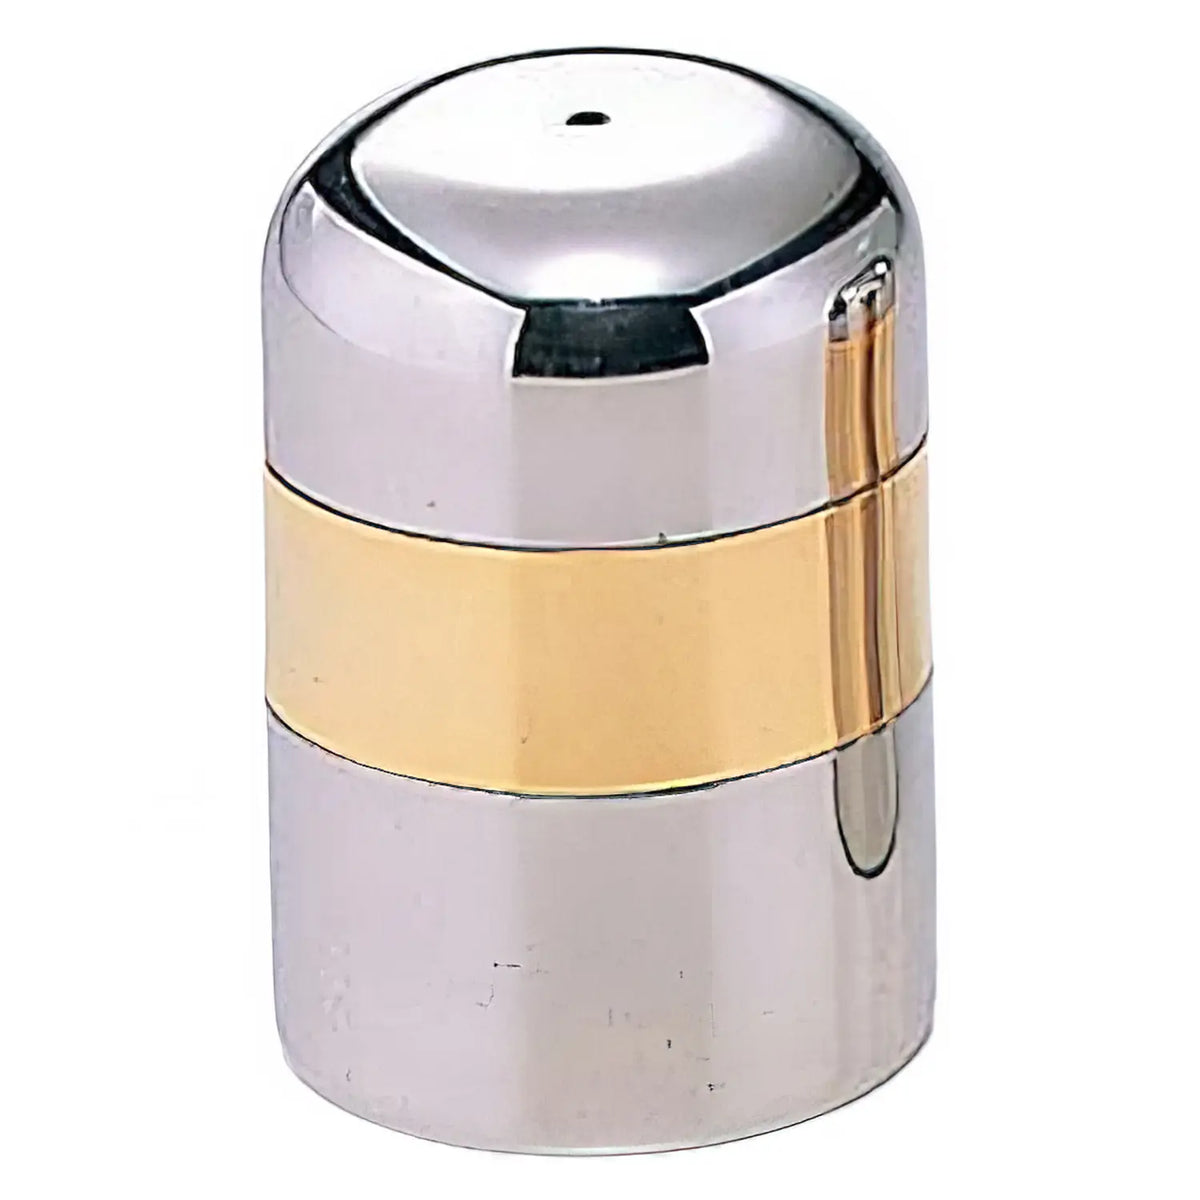 M-TAKA Metallic Stainless Steel Salt Shaker